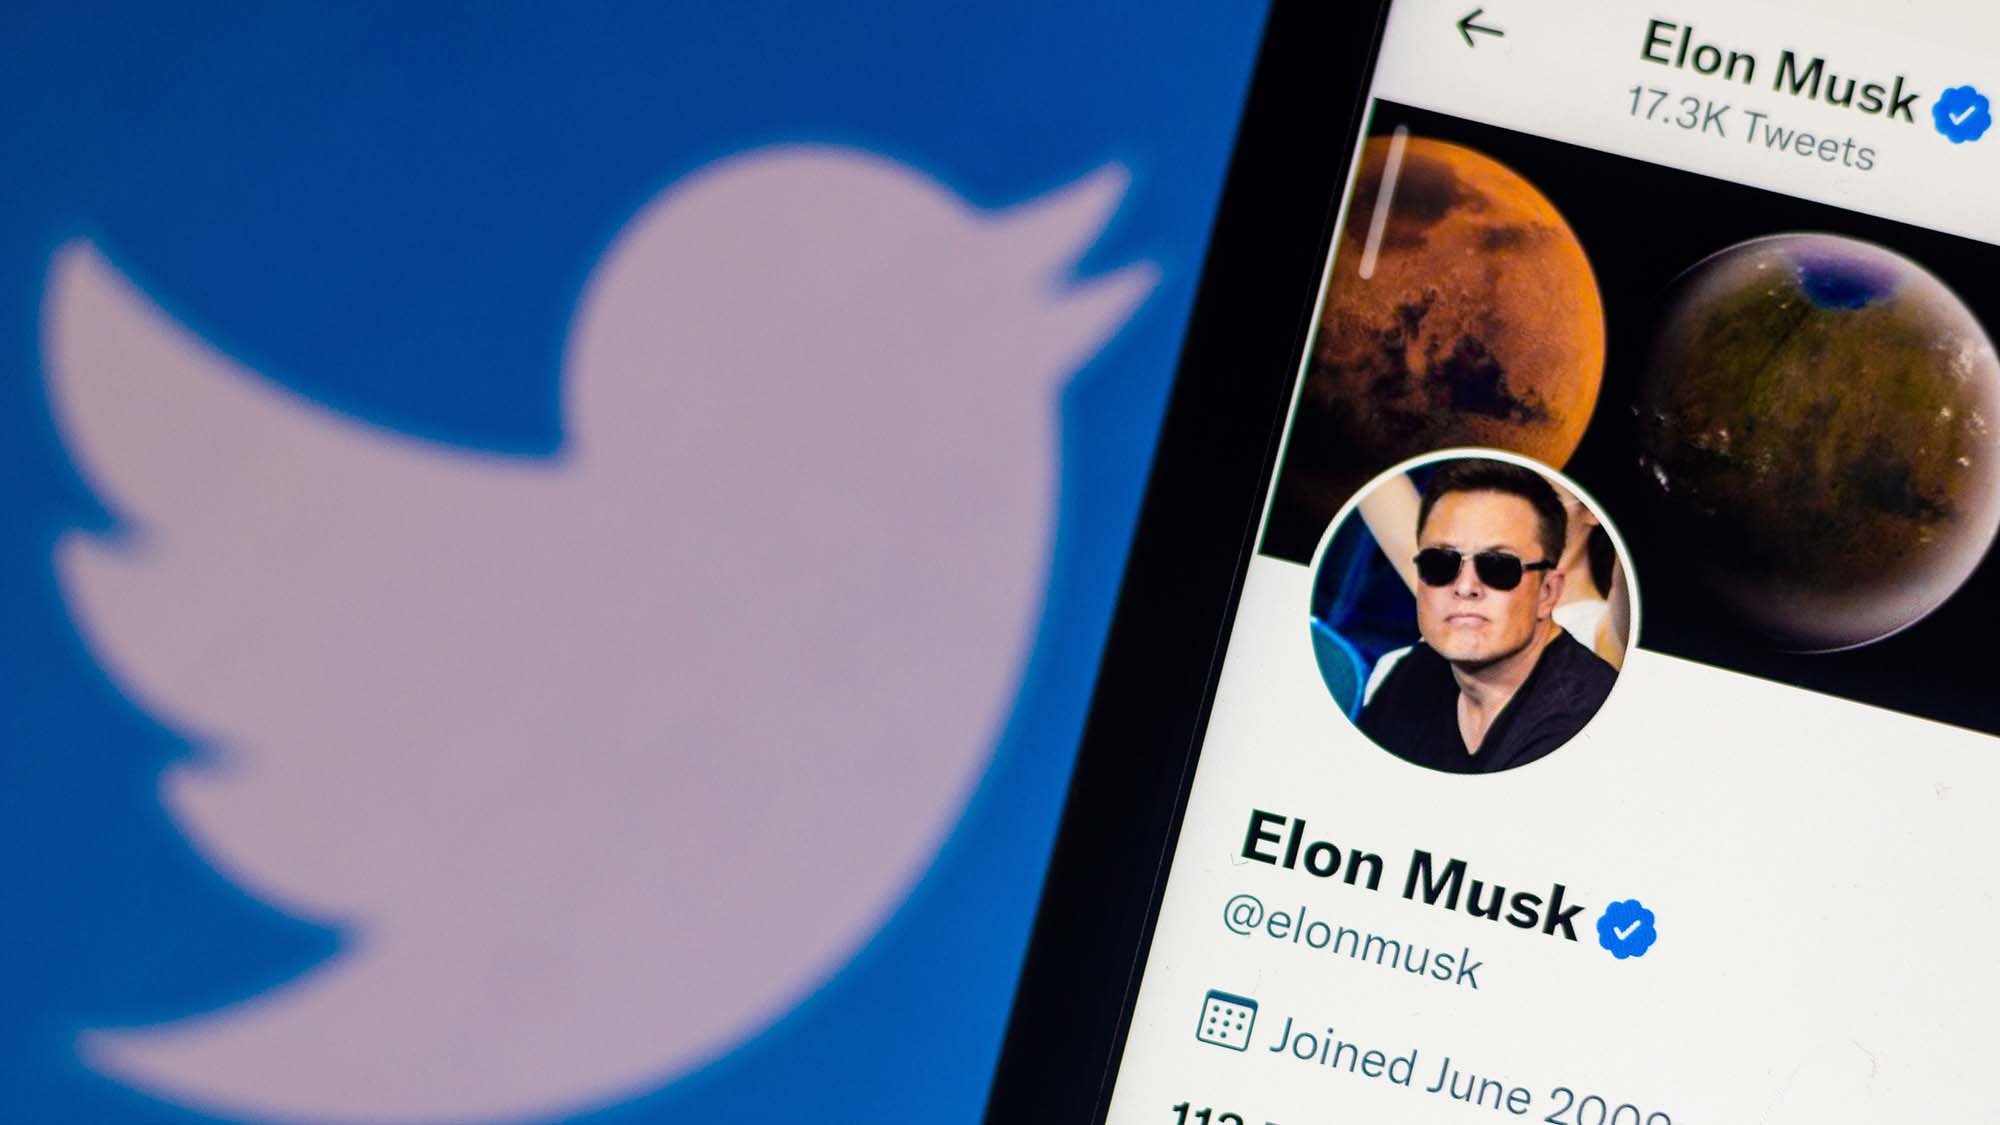 Profil Twitter Elon Musk dipajang dengan logo Twitter di dinding di belakangnya